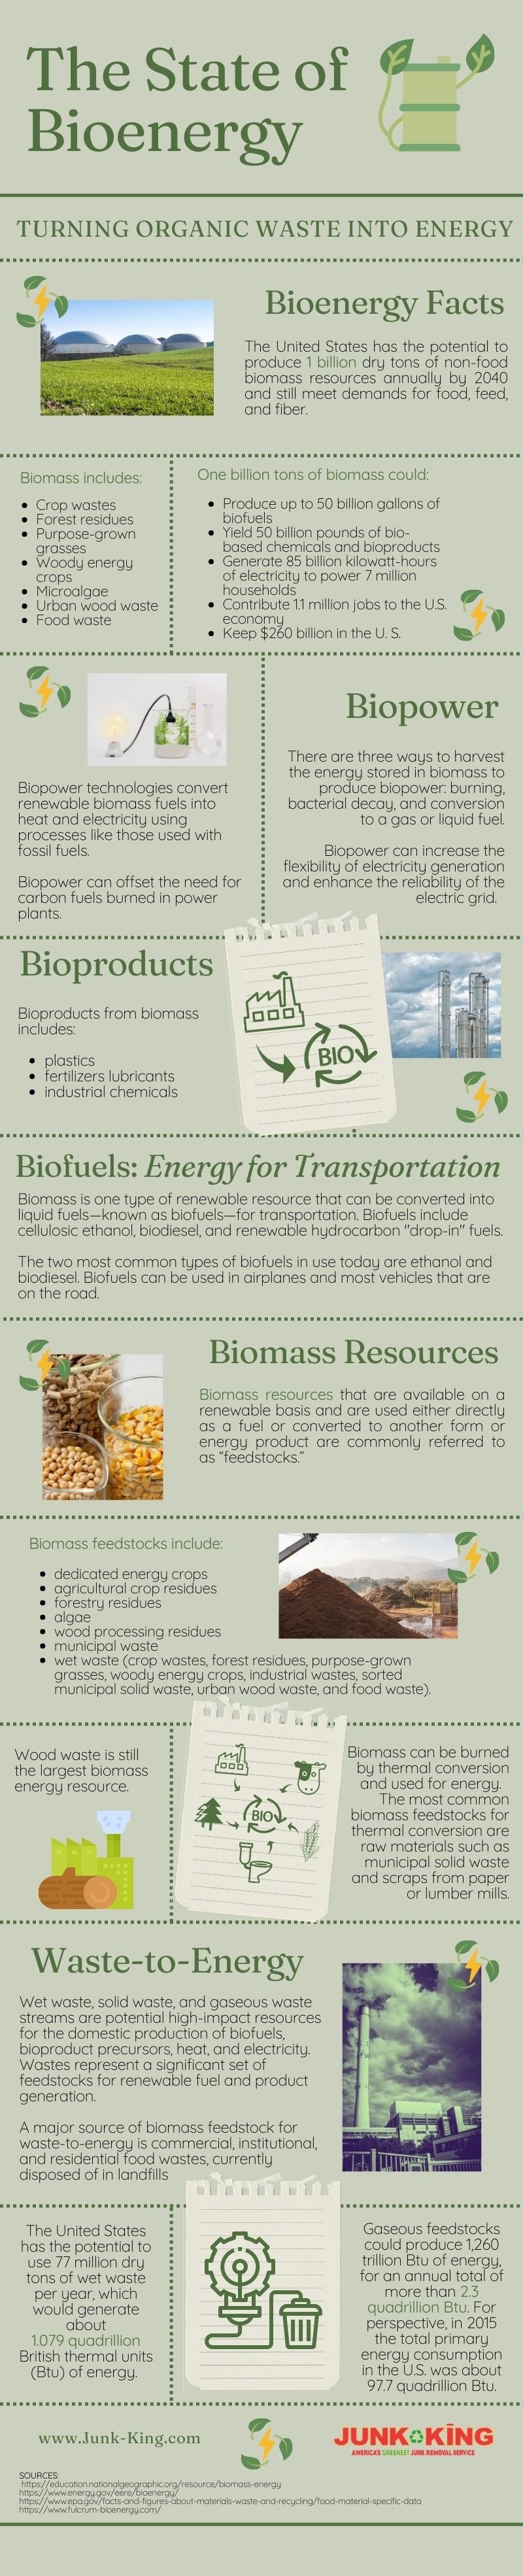 the state of bioenergy